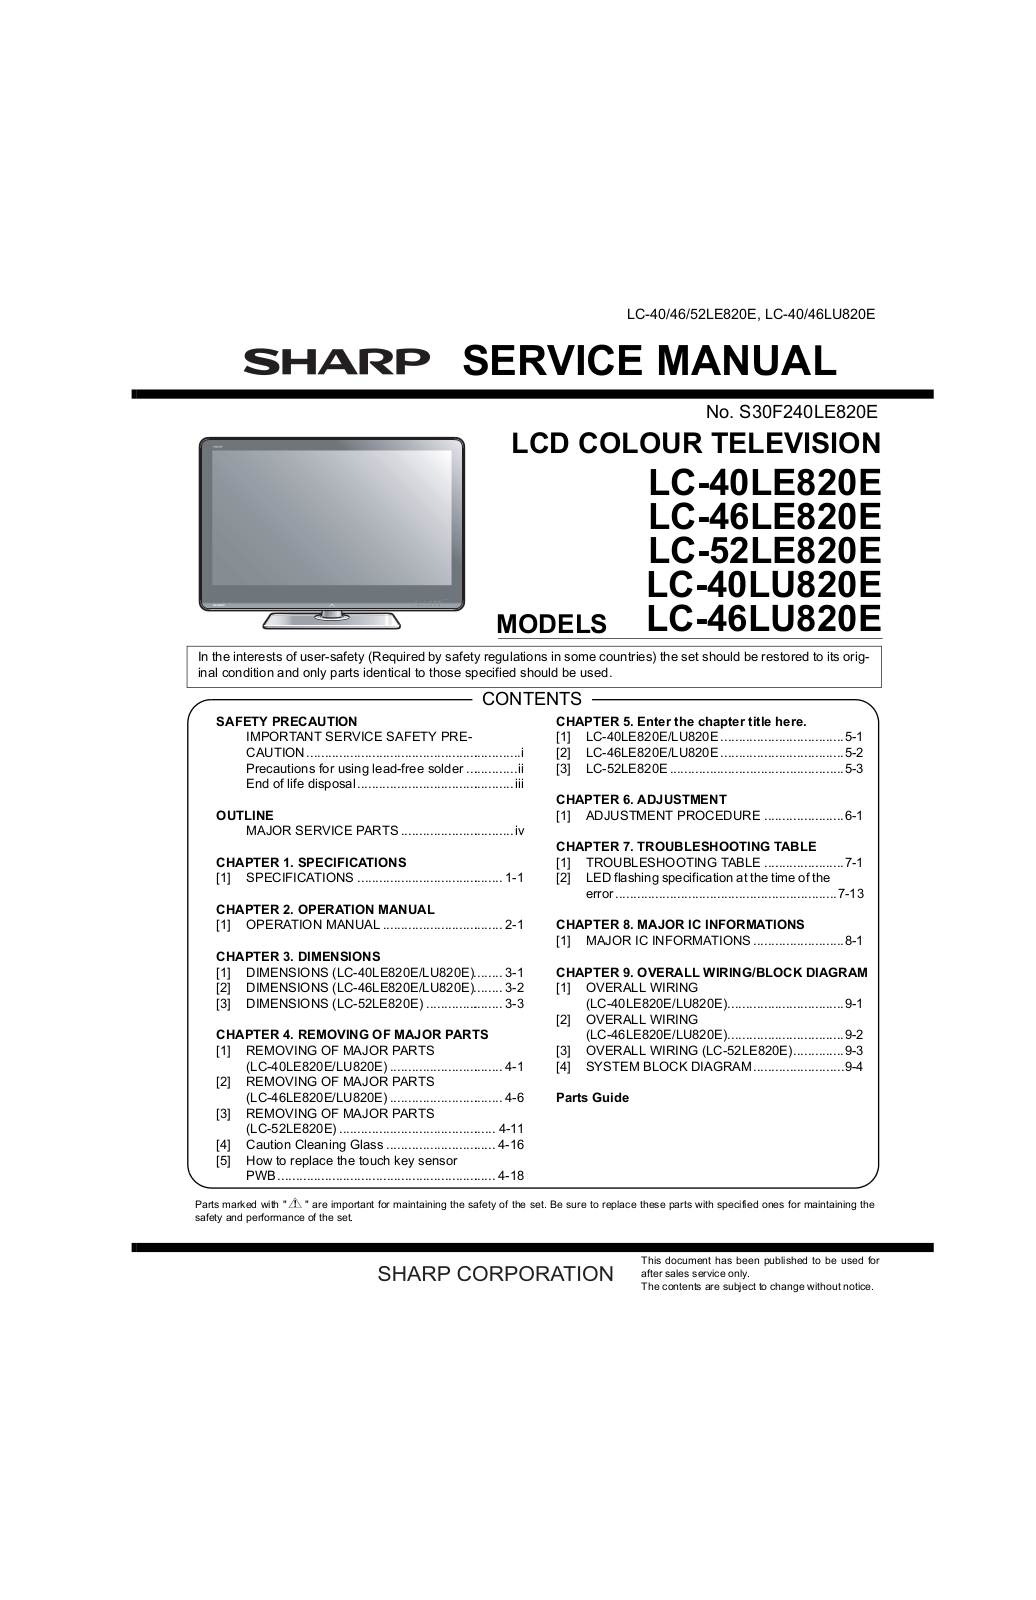 SHARP LC-40LE820E, LC-46LE820E, LC-52LE820E, LC-40LU820E, LC-46LU820E Service Manual